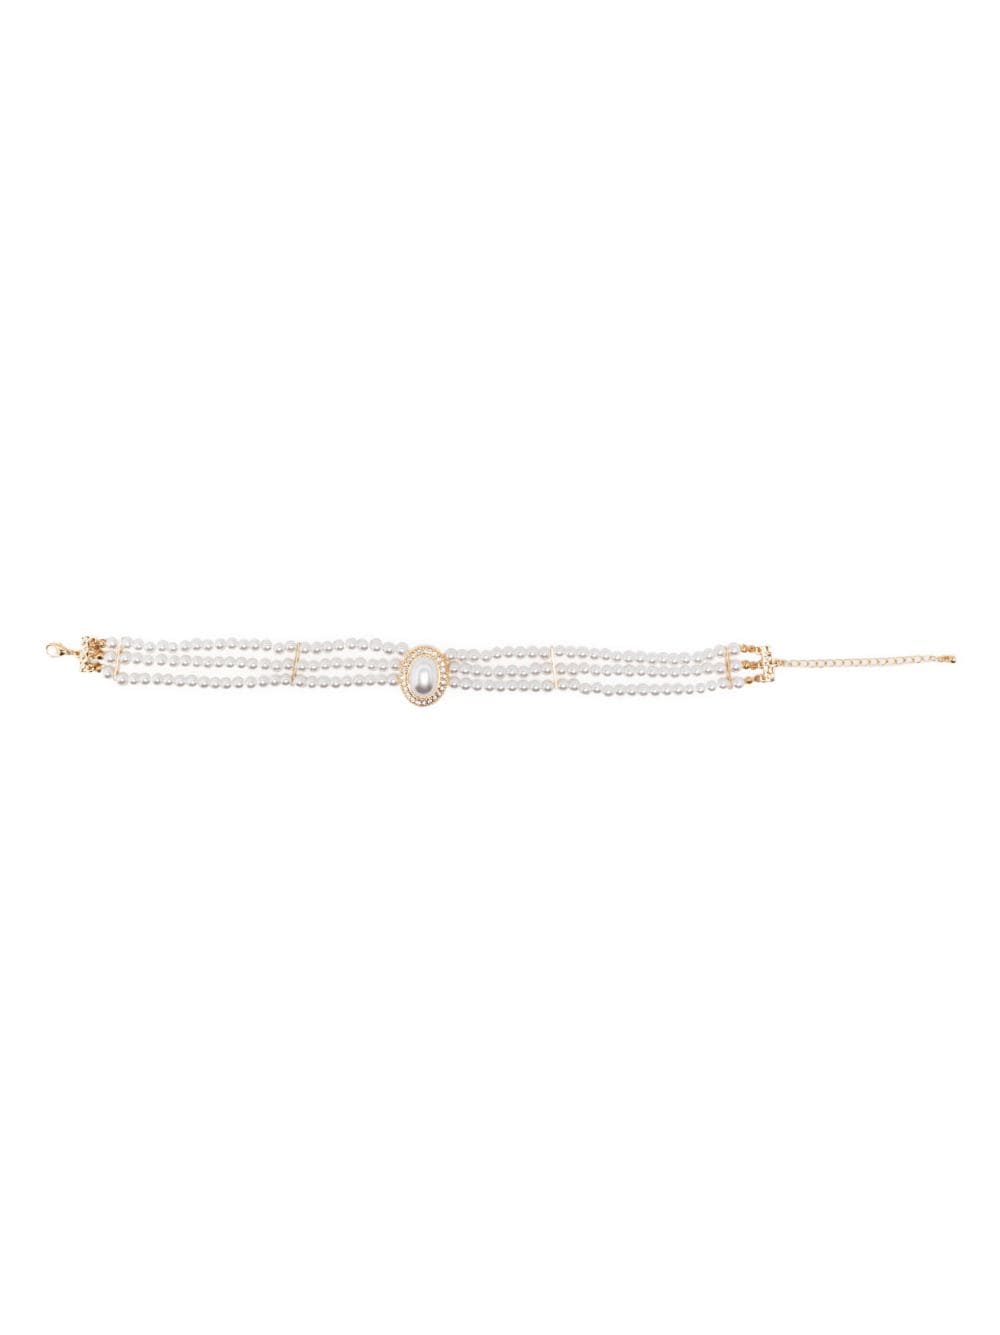 Hzmer Jewelry pearl choker necklace - White von Hzmer Jewelry